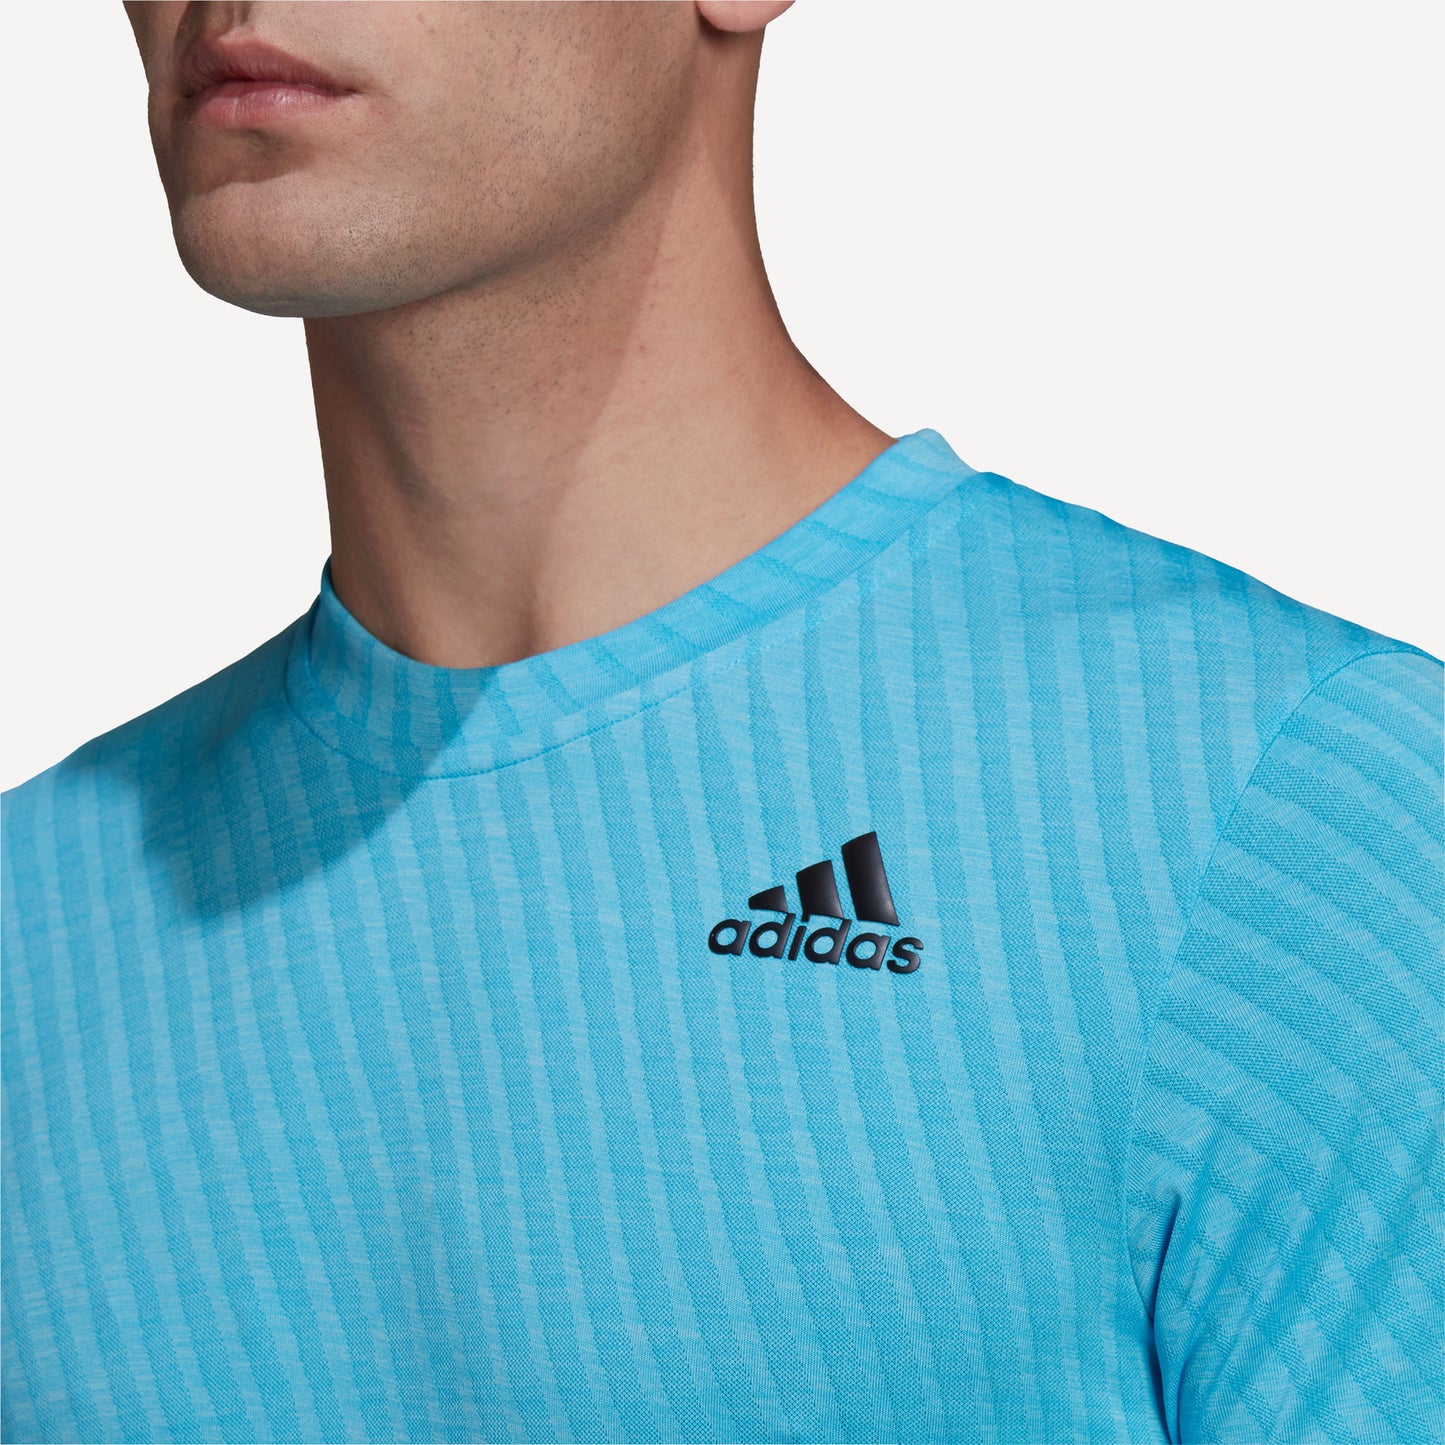 adidas Freelift Men's Tennis Shirt Blue (7)